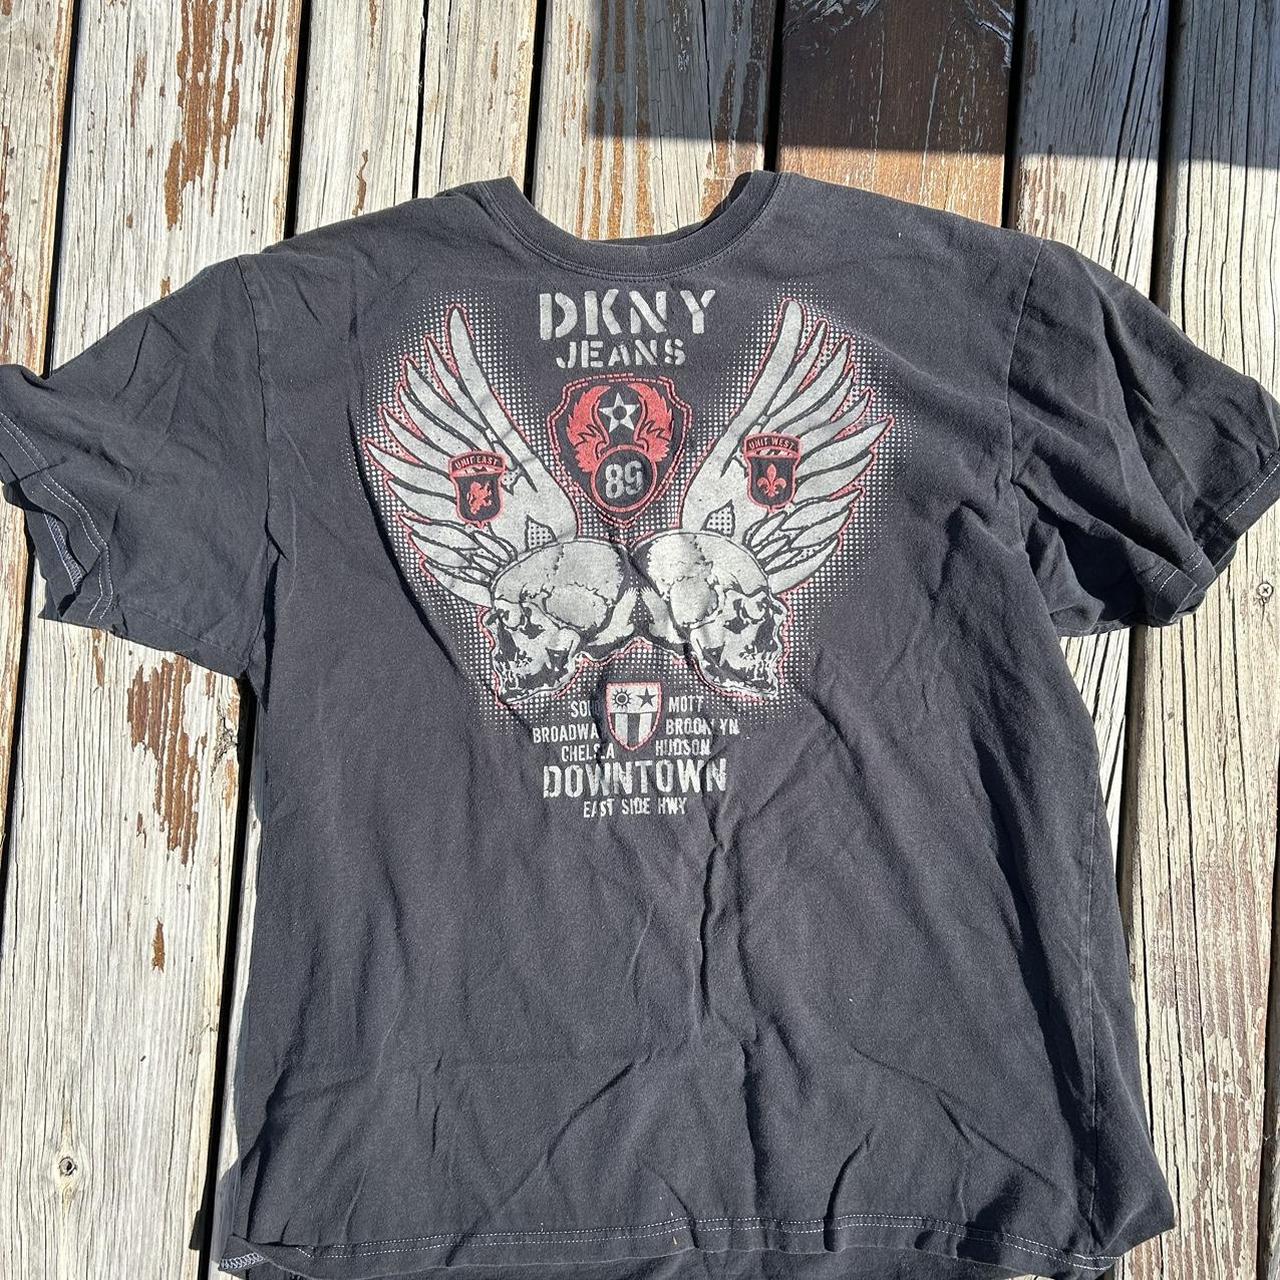 Dkny t-shirt - Depop